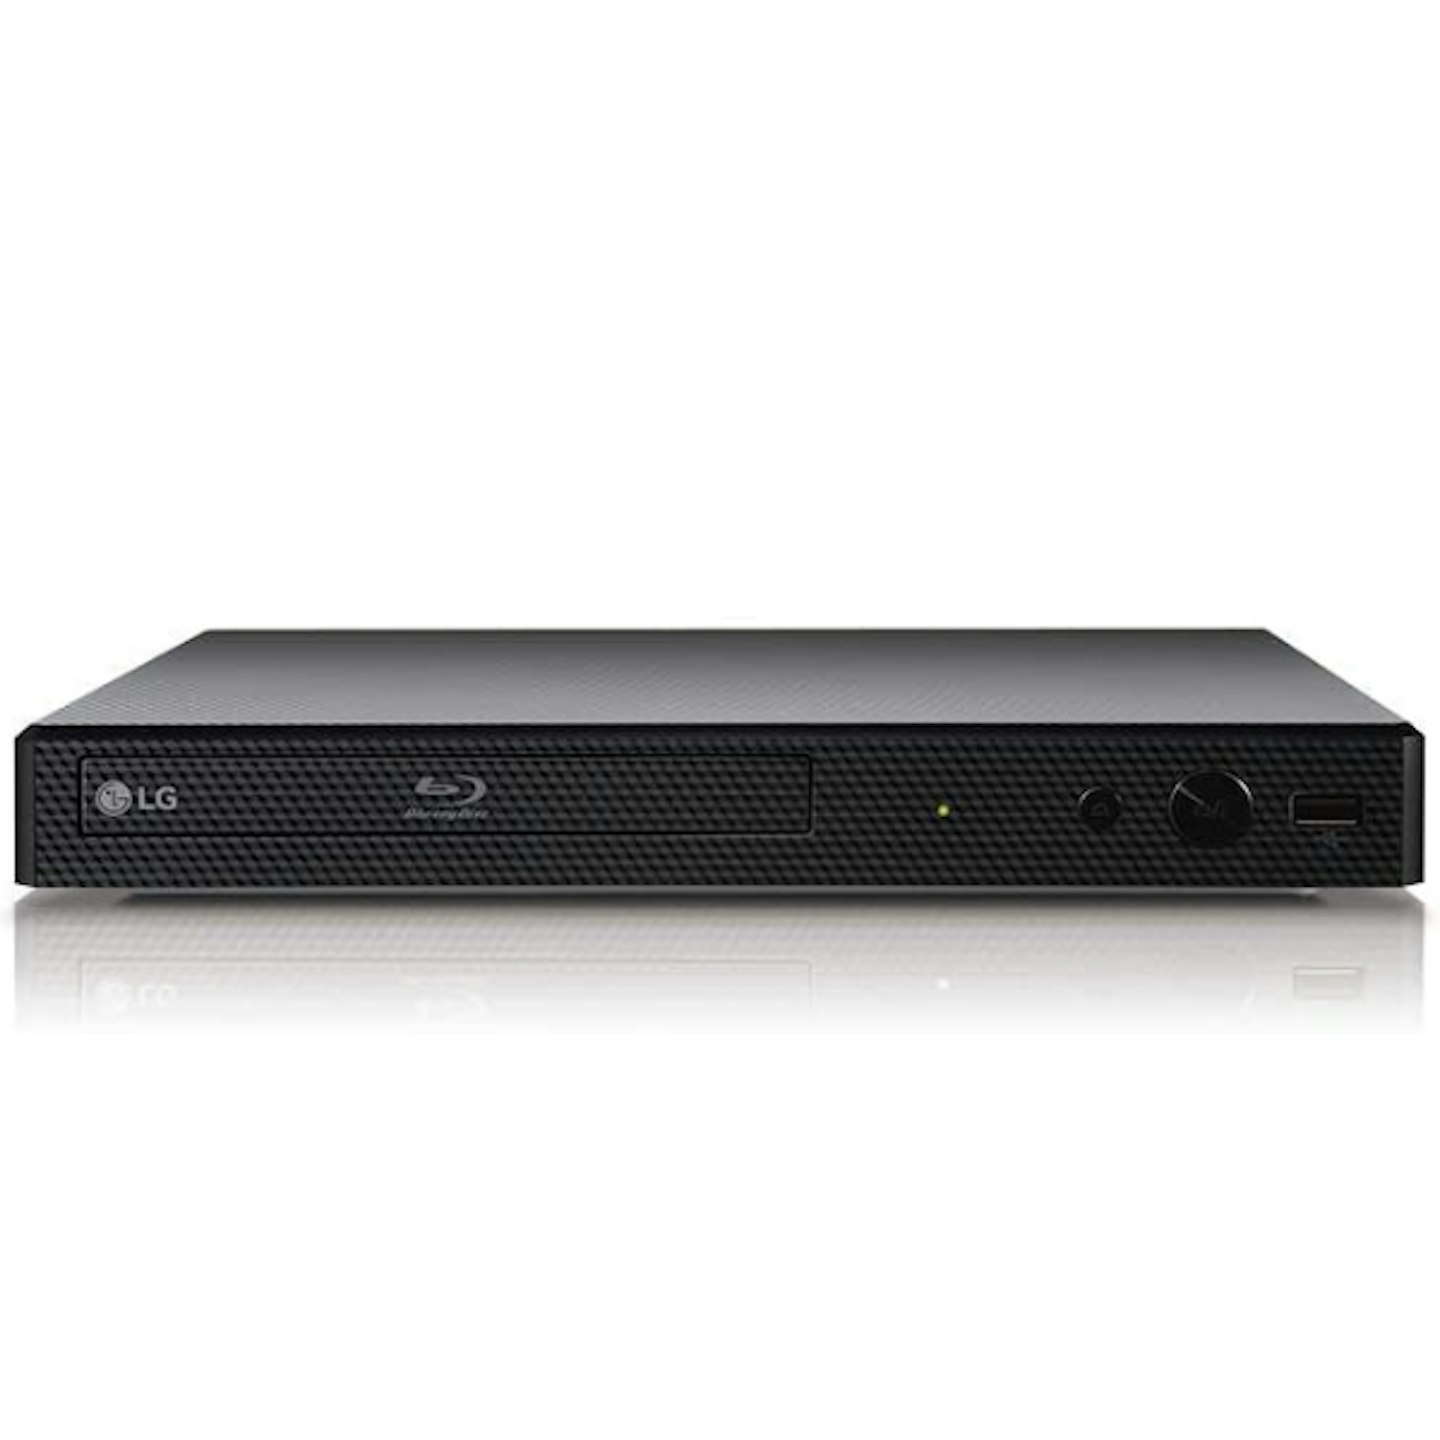 LG BP250 Blu-ray and DVD Player